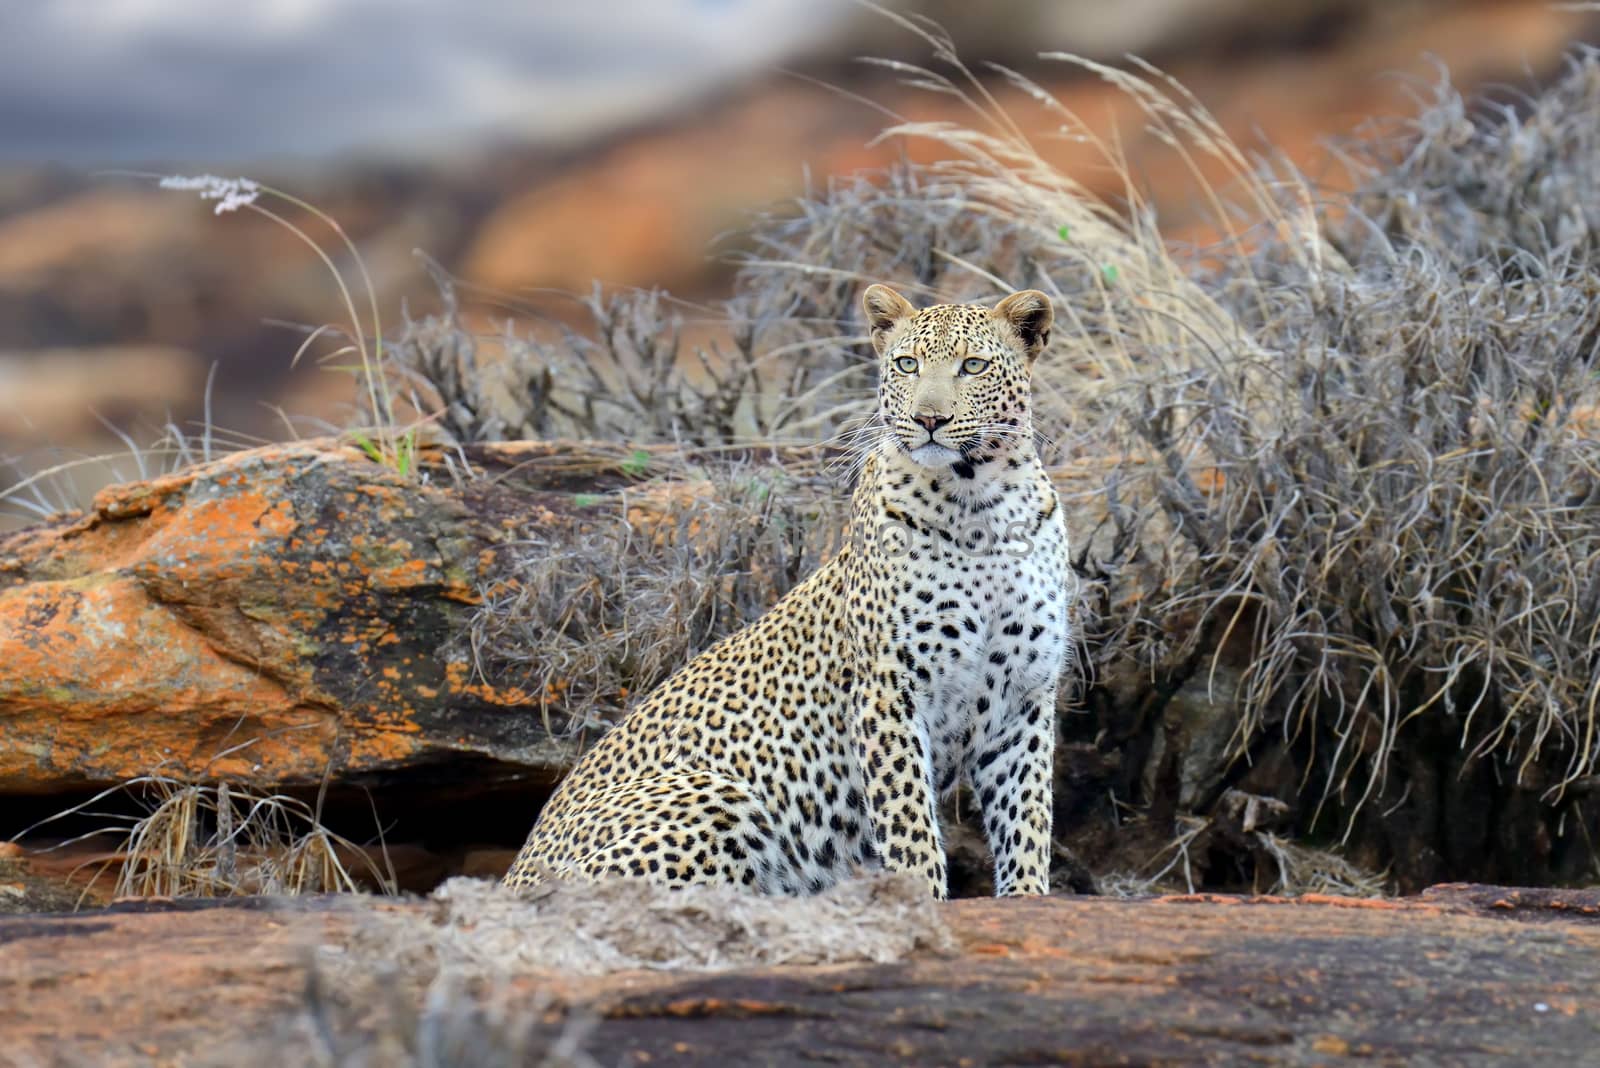 Close-up leopard in National park of Kenya, Africa